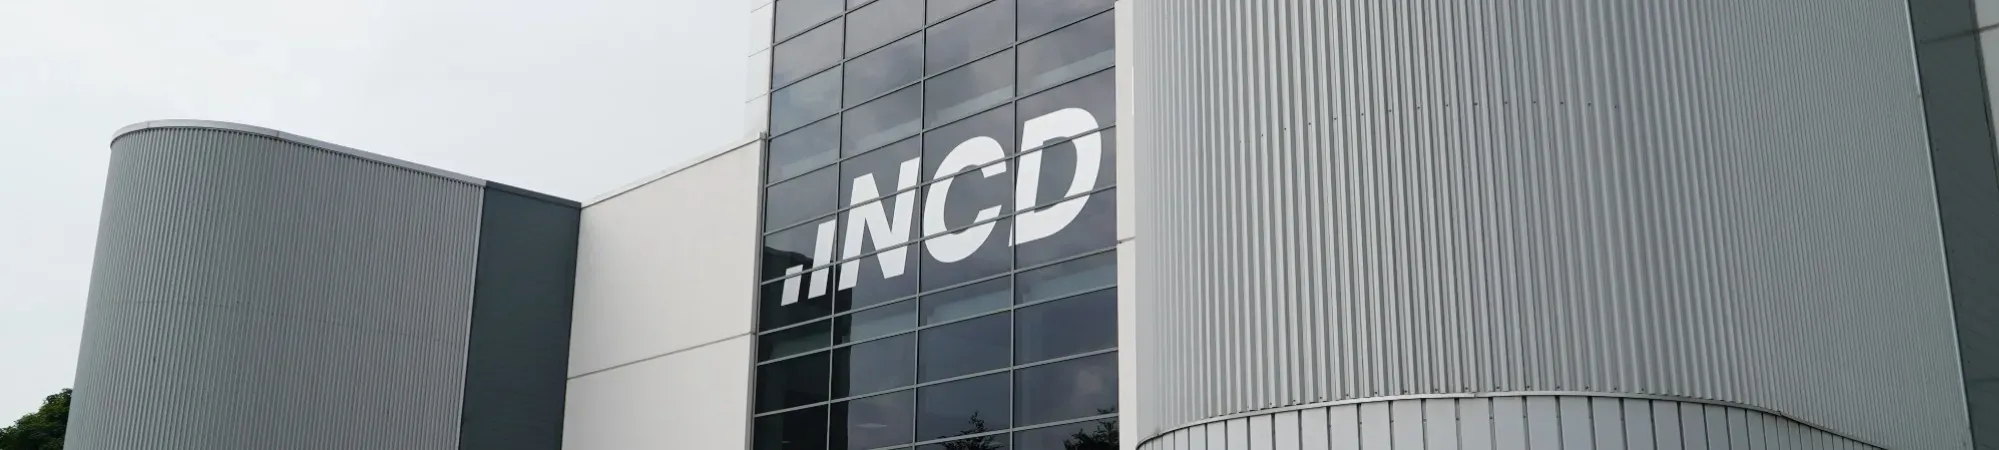 NCD Entrance